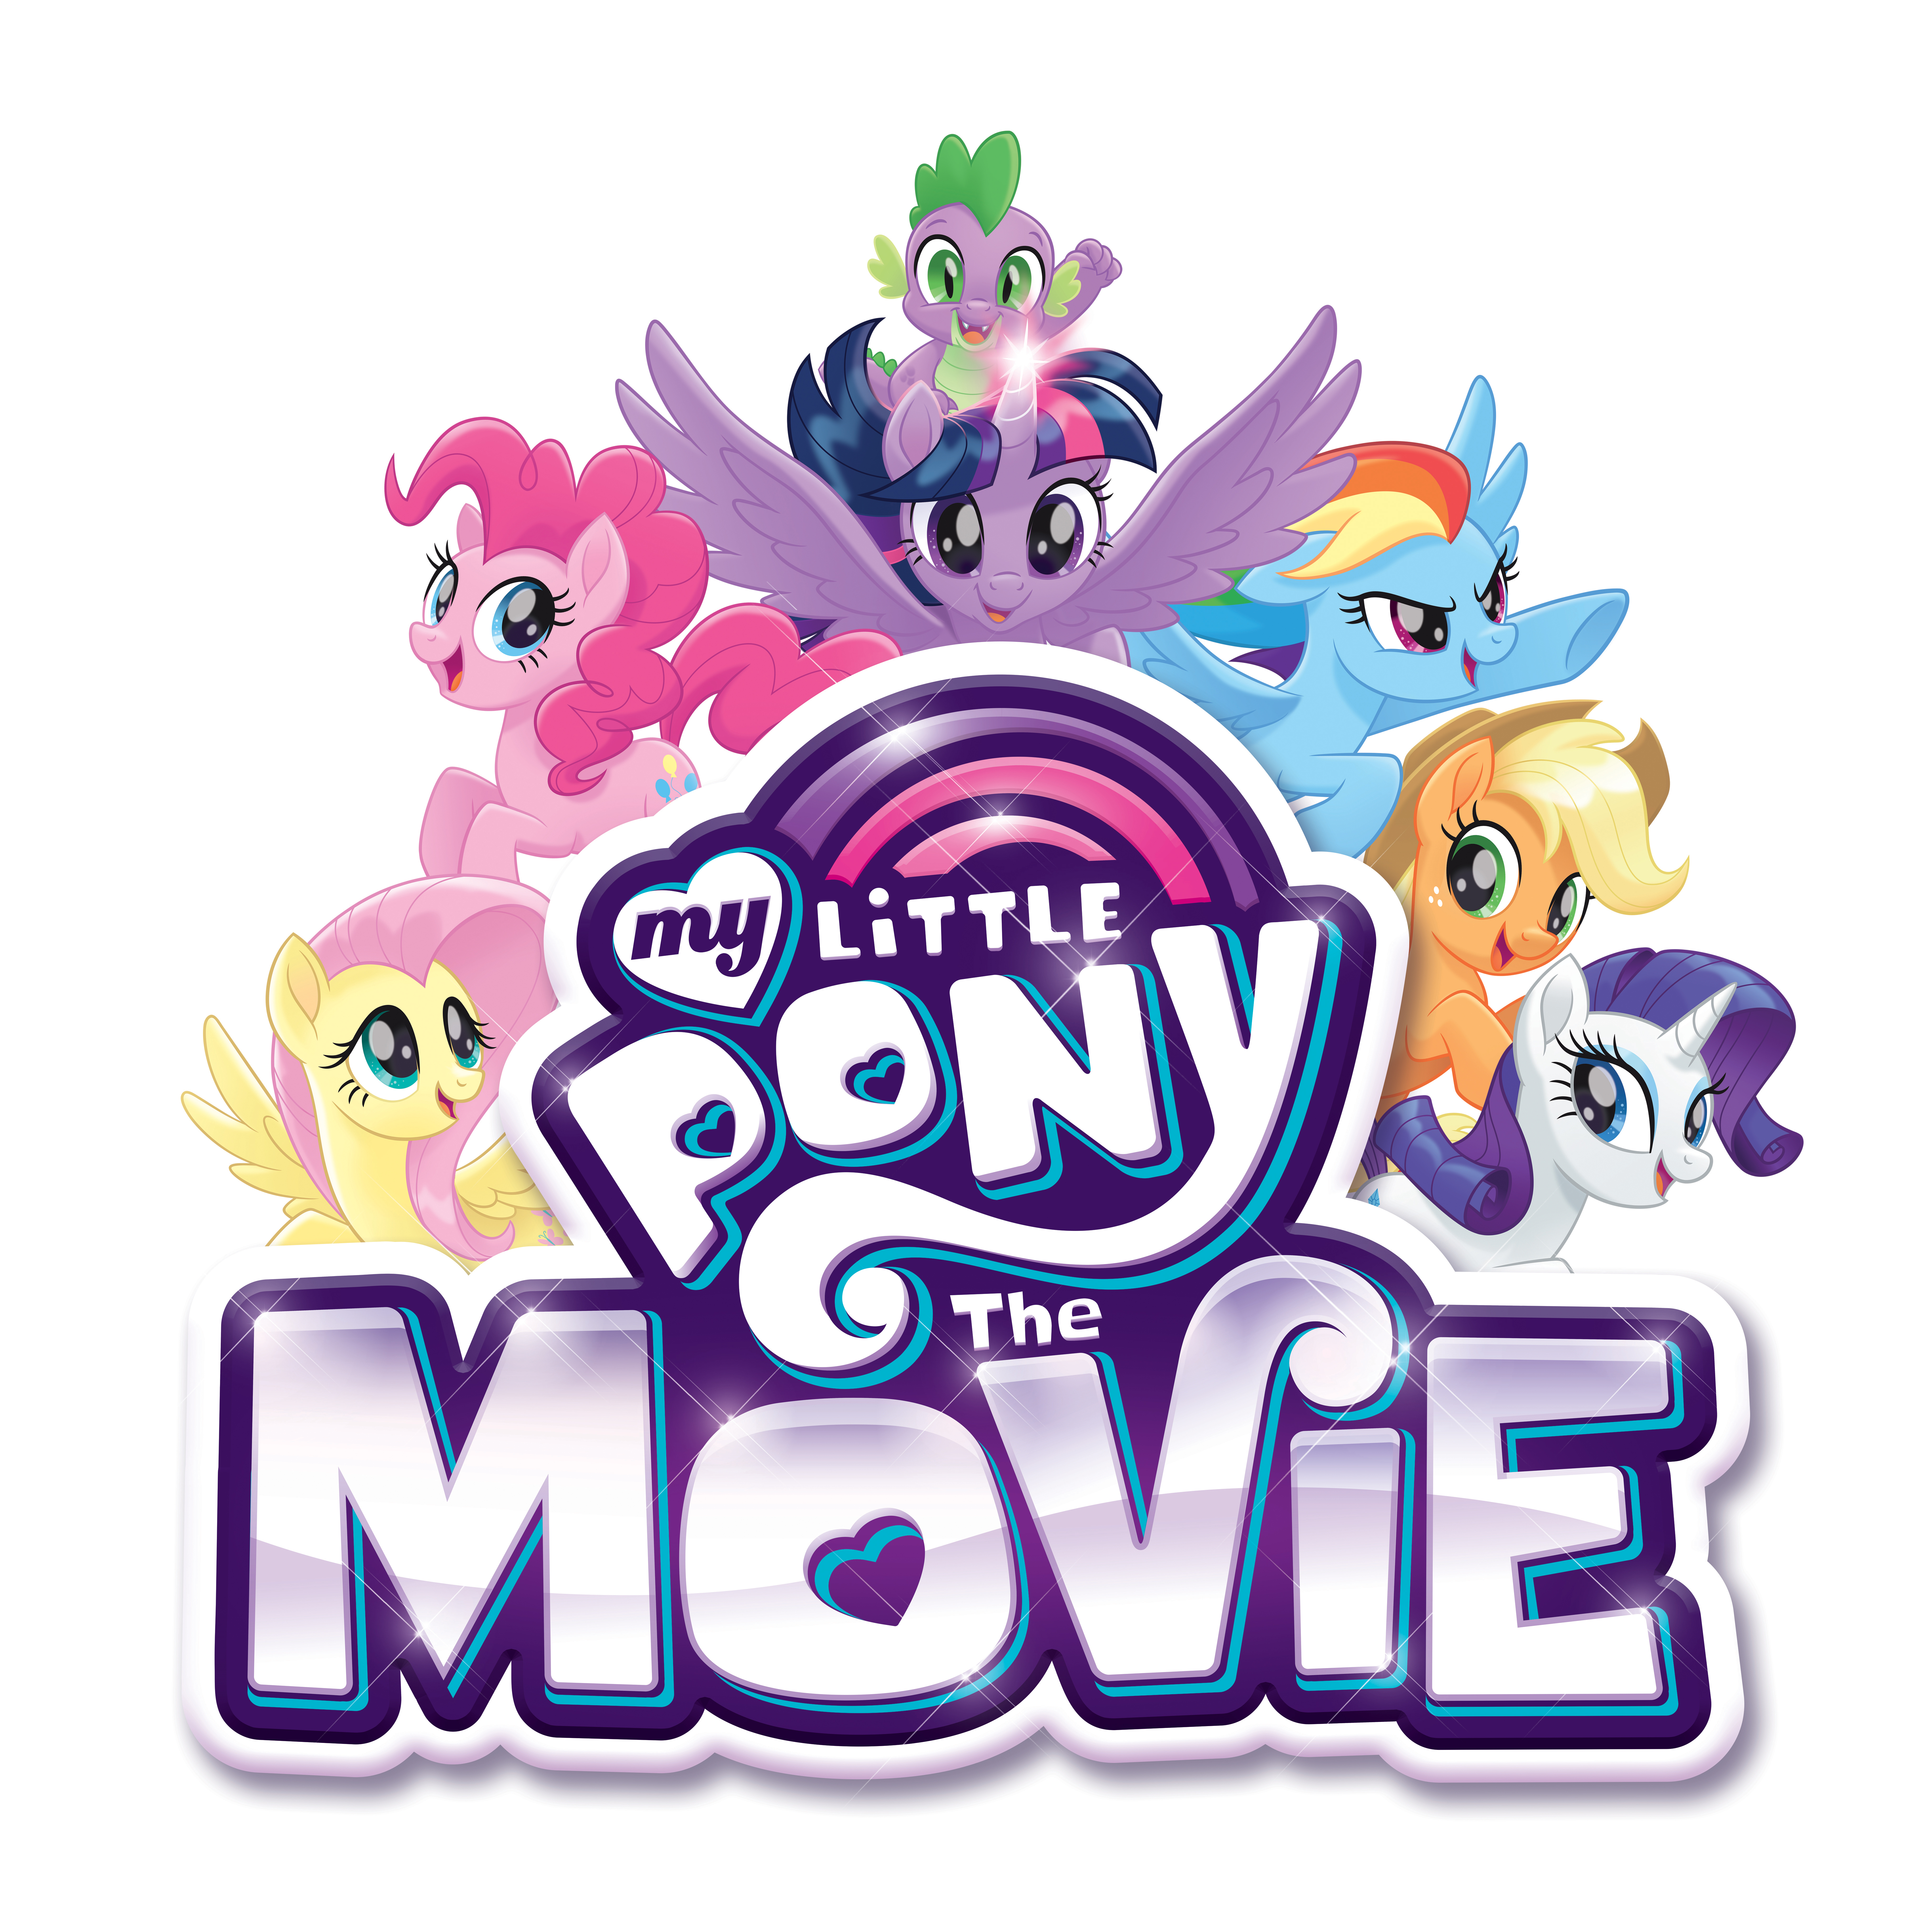 my-little-pony-logo.jpg